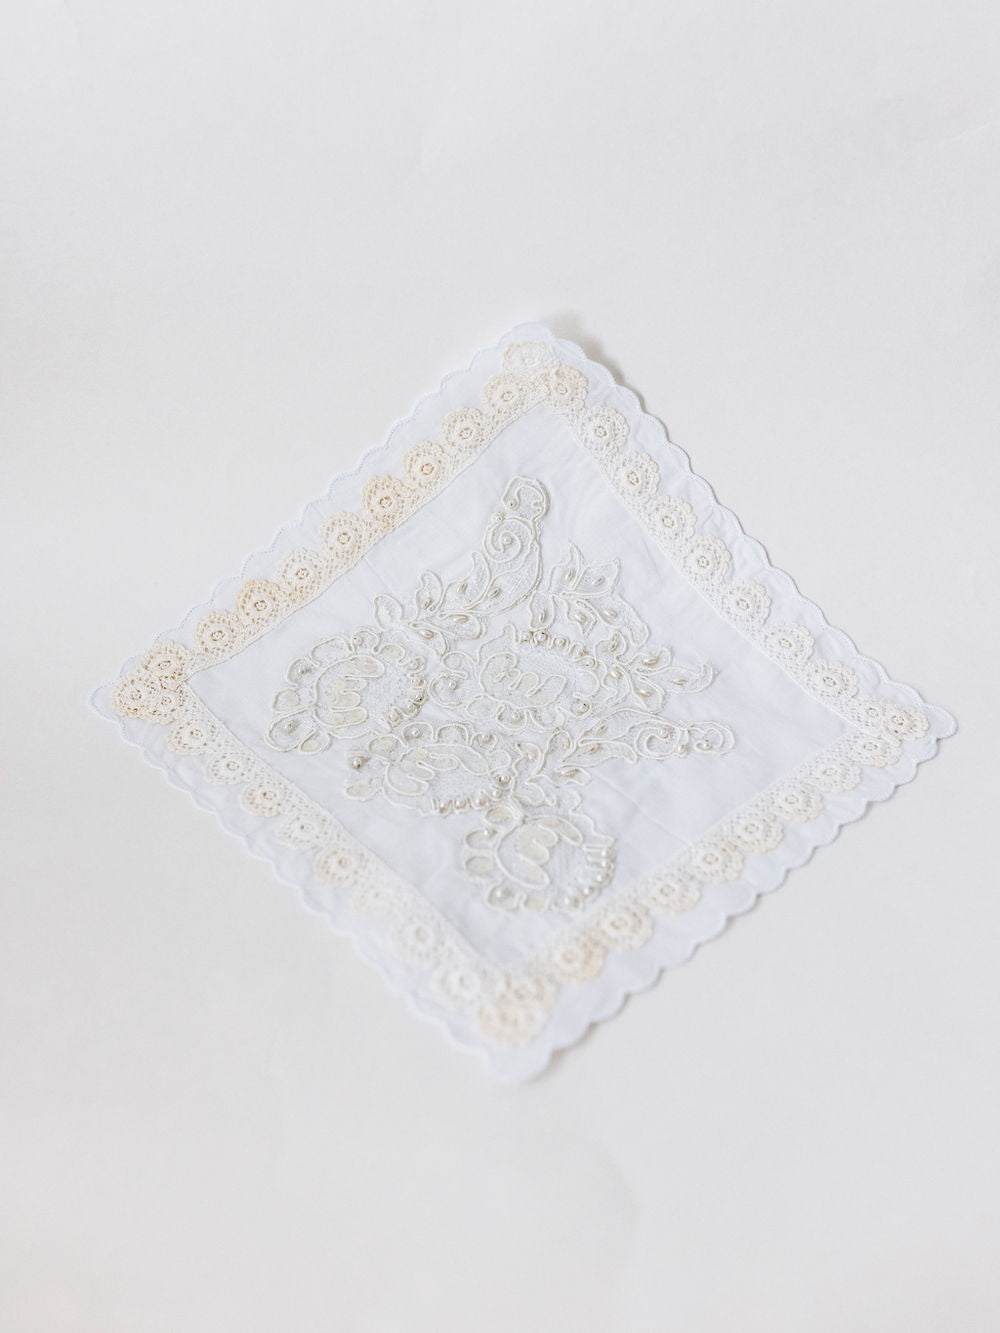 custom ivory handkerchief from grandmother's wedding dress lace handmade by The Garter GIrl